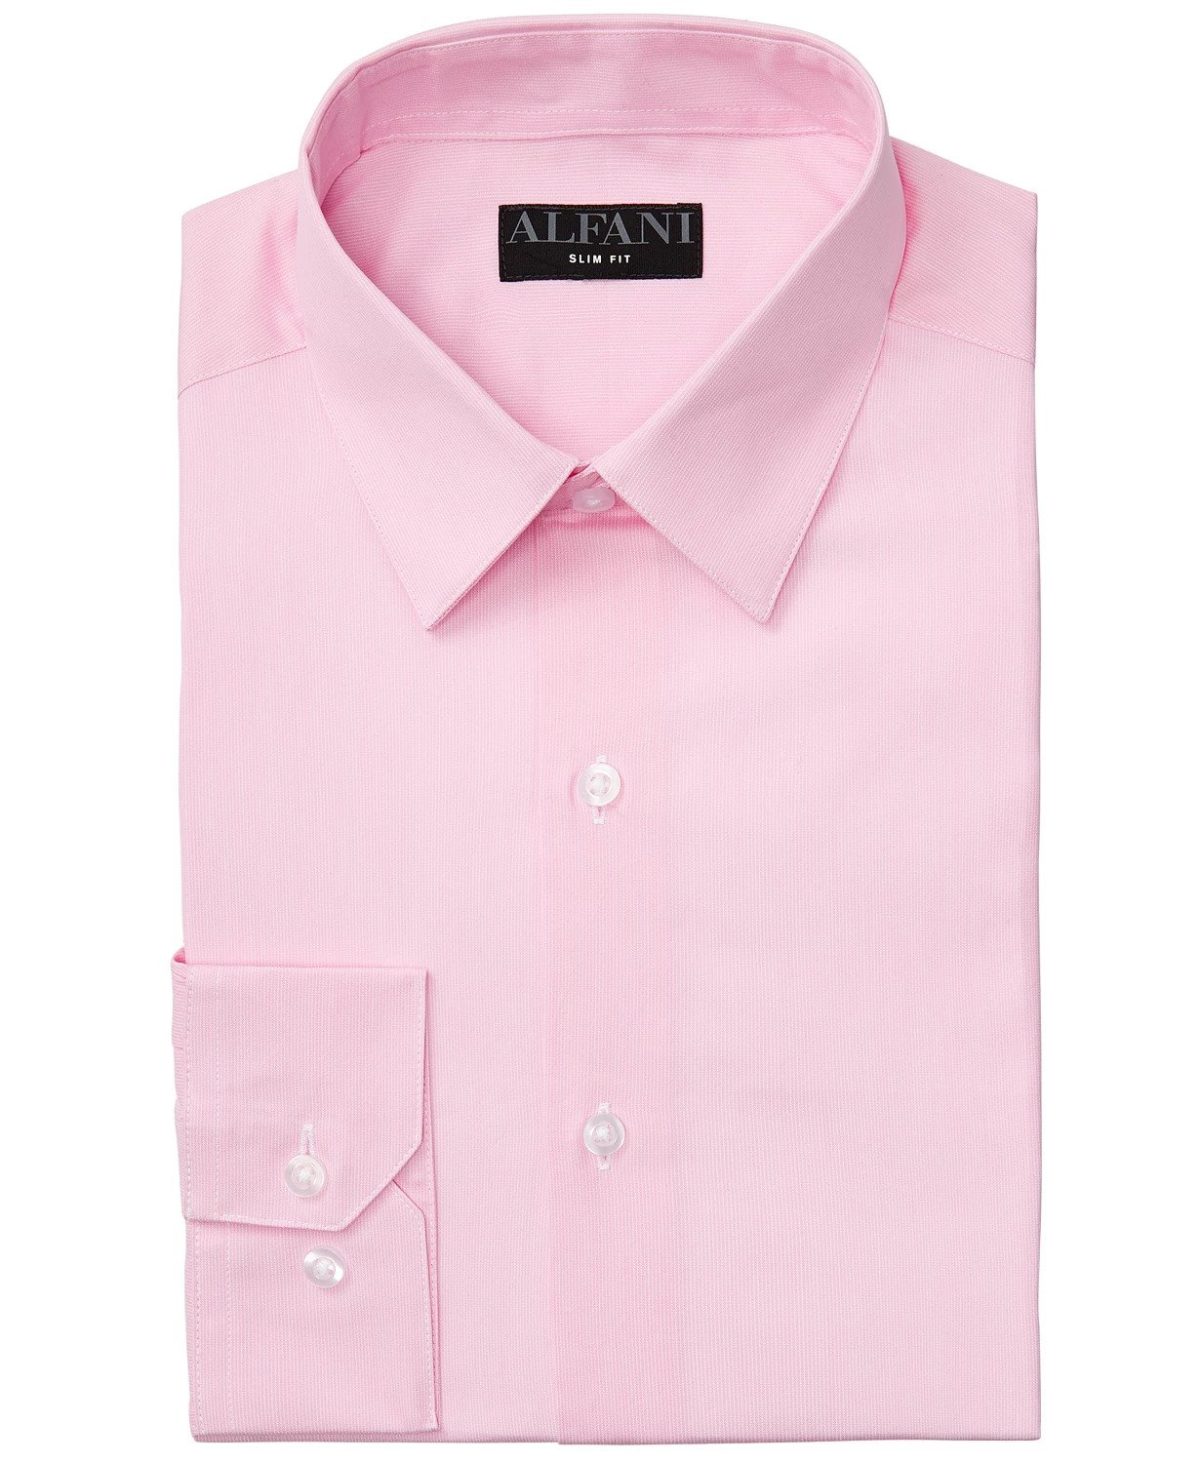 Alfani Men’s AlfaTech Dress Shirt $4.93+FREE PICKUP